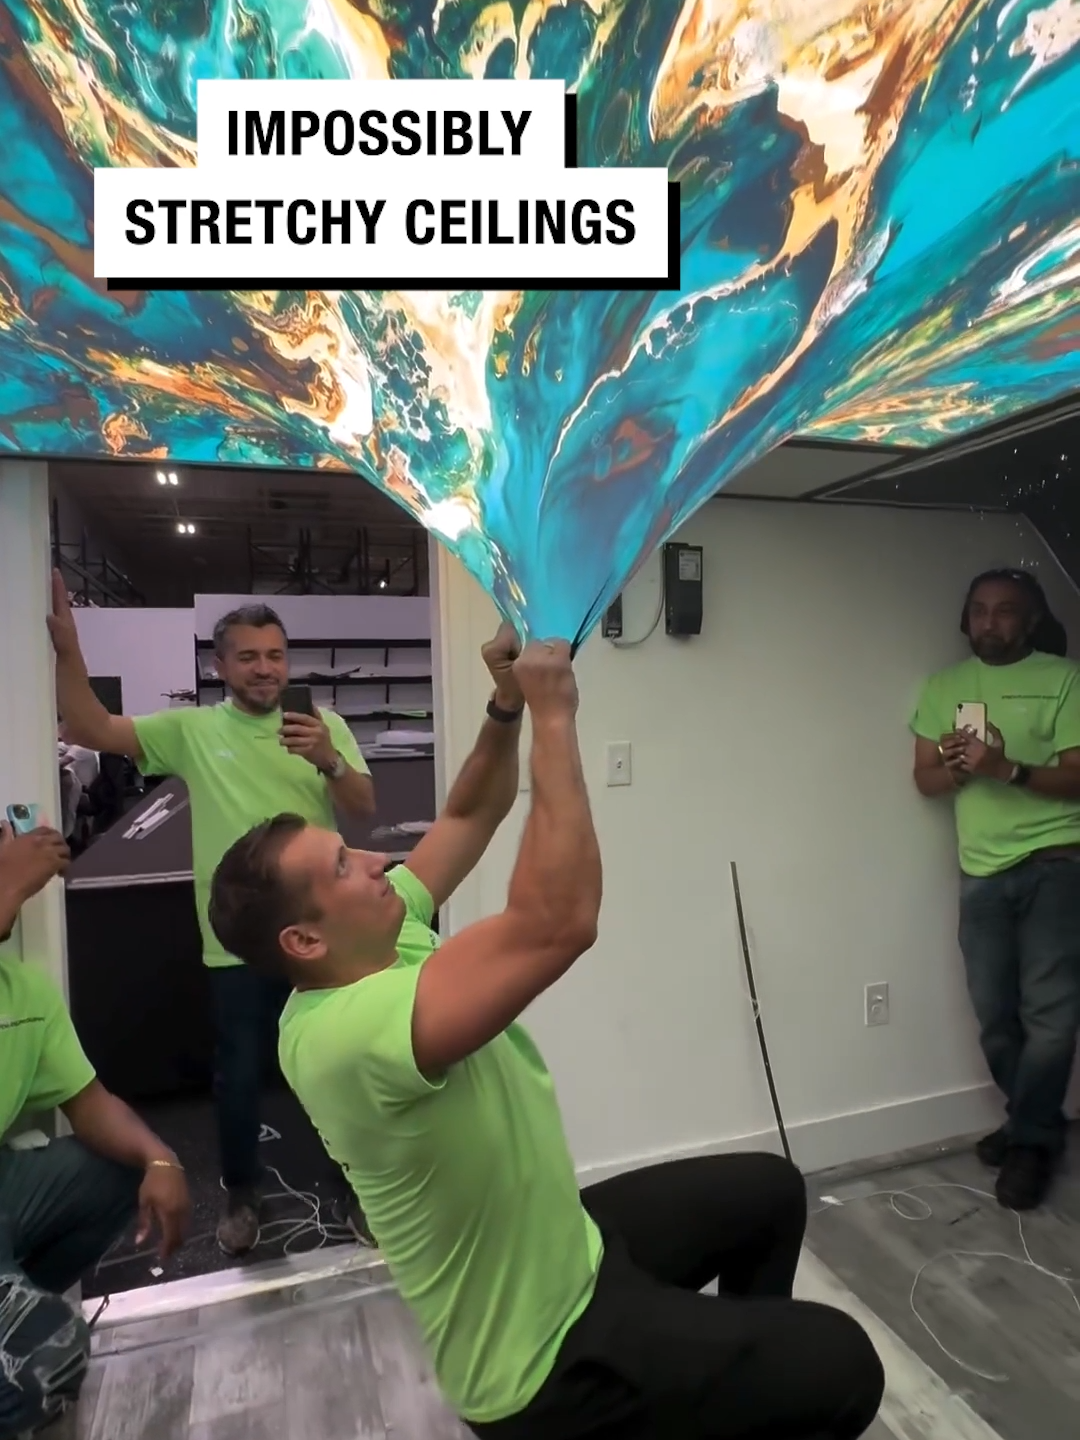 What's going on here?! 🤣😵‍💫 🎥 stretchceilingsupply #UNILAD #ceiling #homedecor #strange #design #fun #stretchy